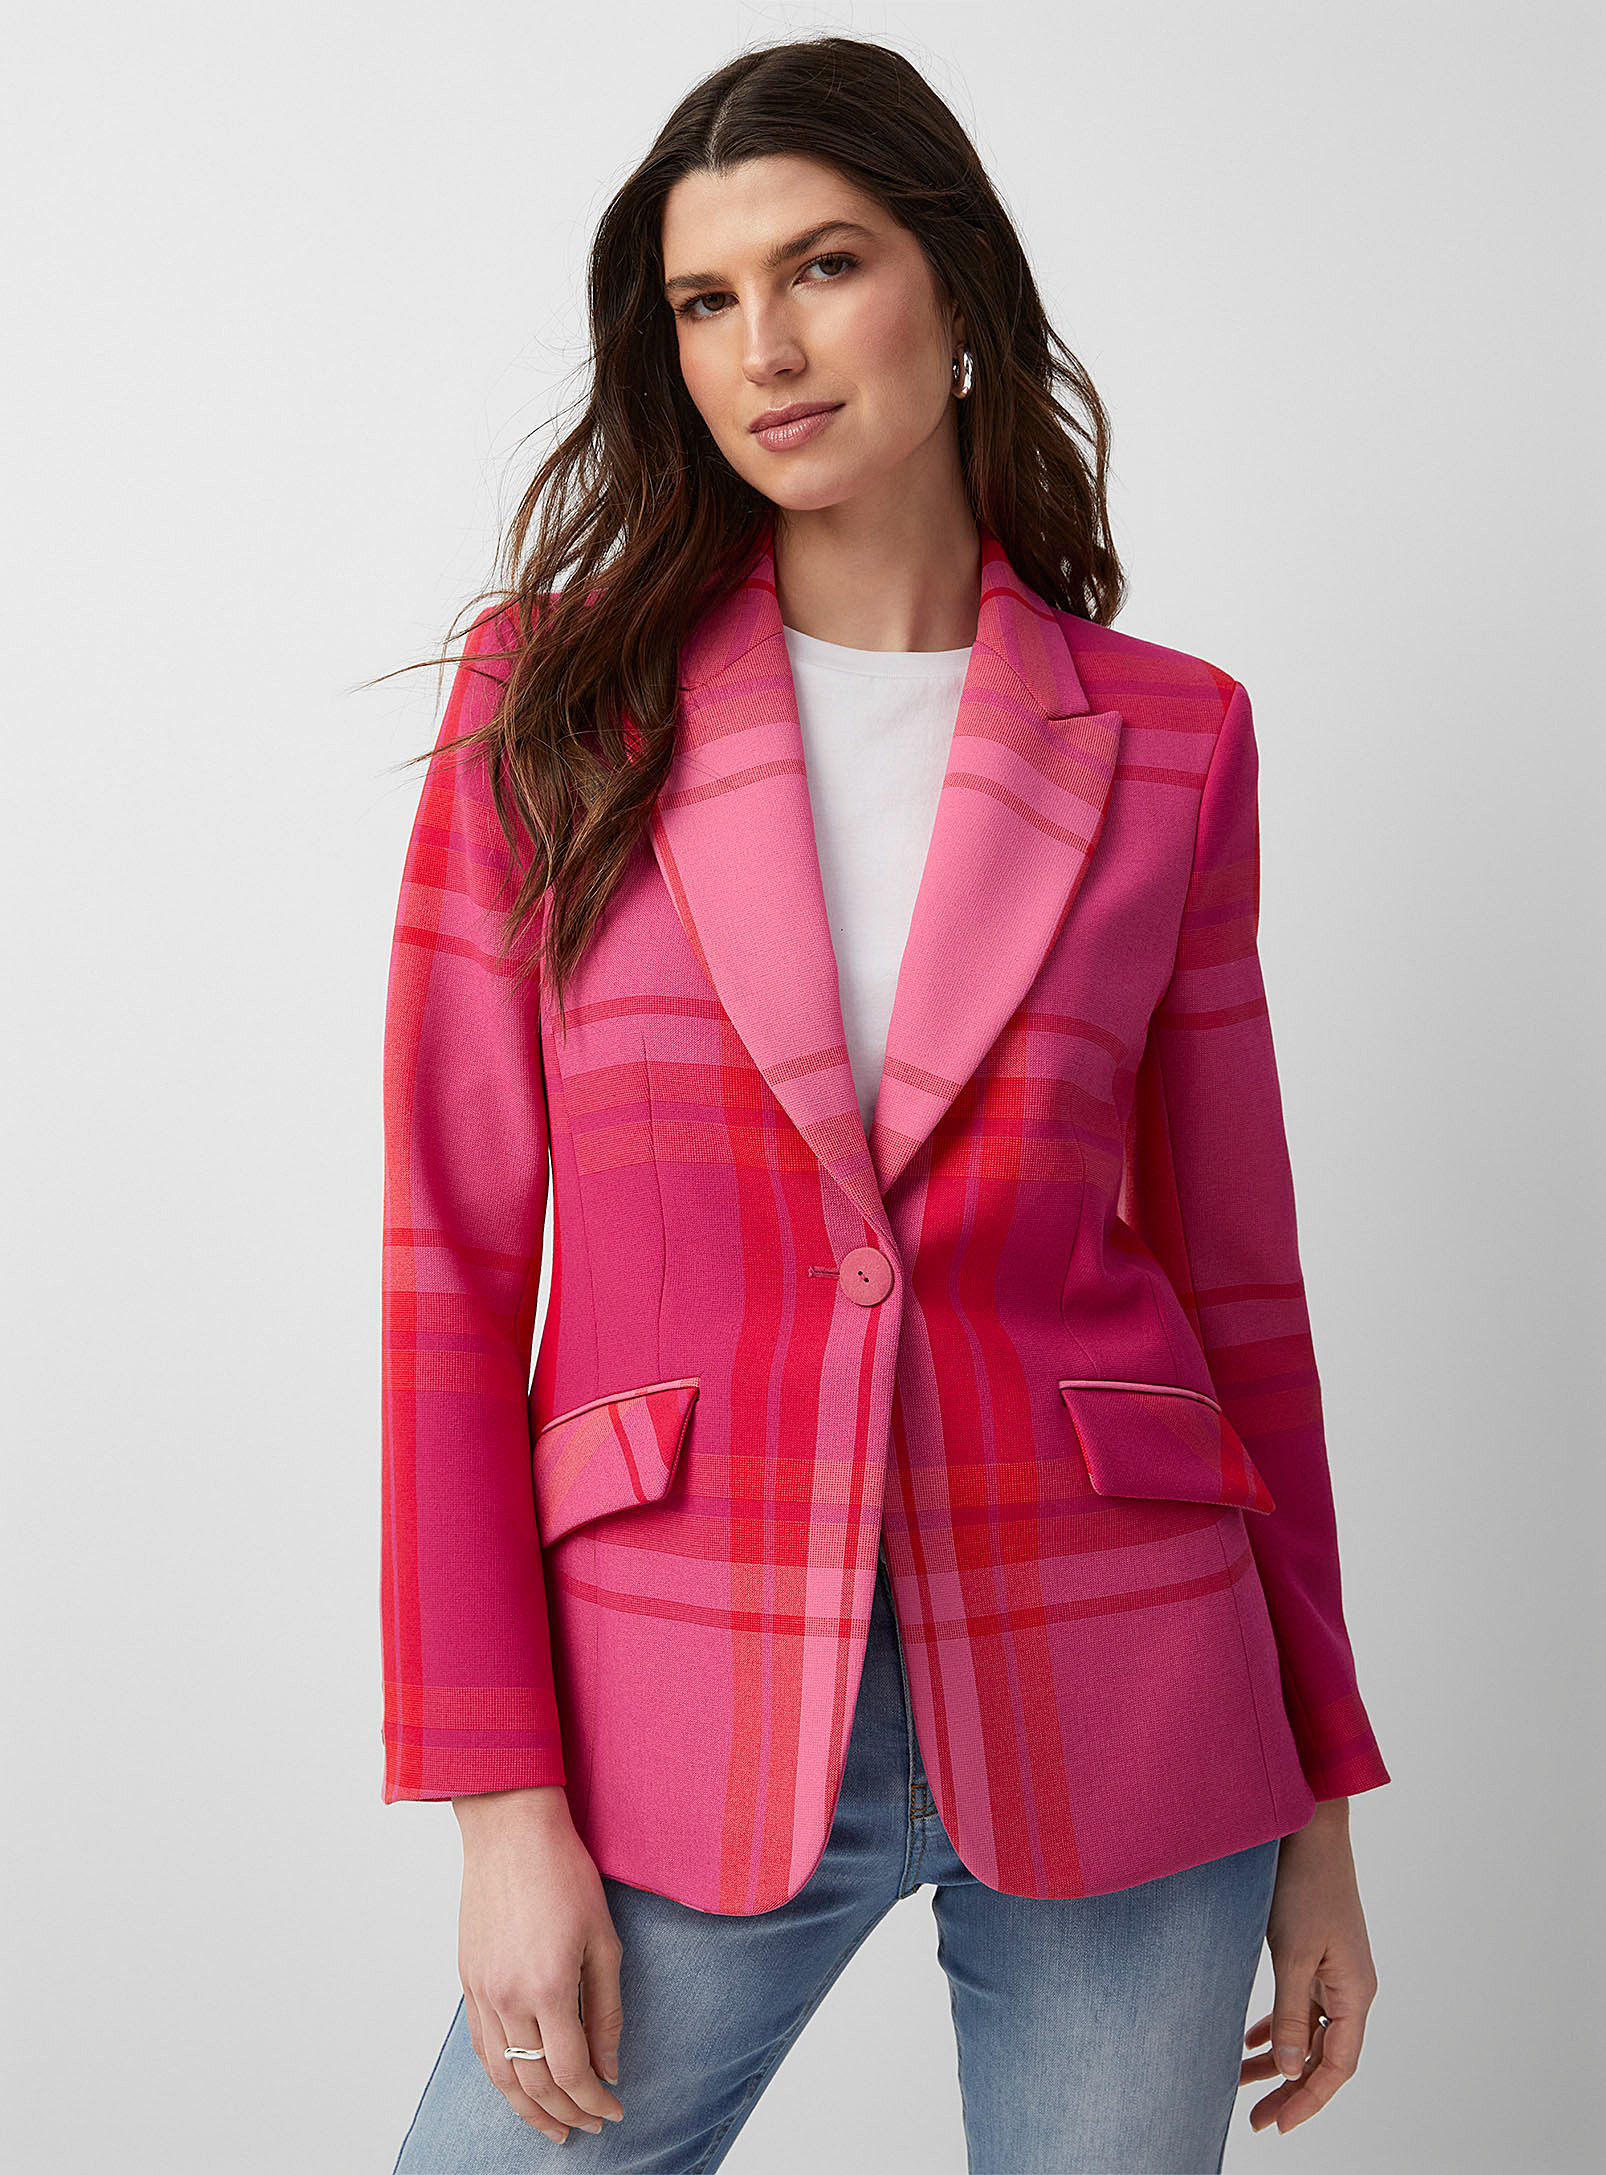 Iris Setlakwe - Exquisite checkers fitted Blazer Jacket